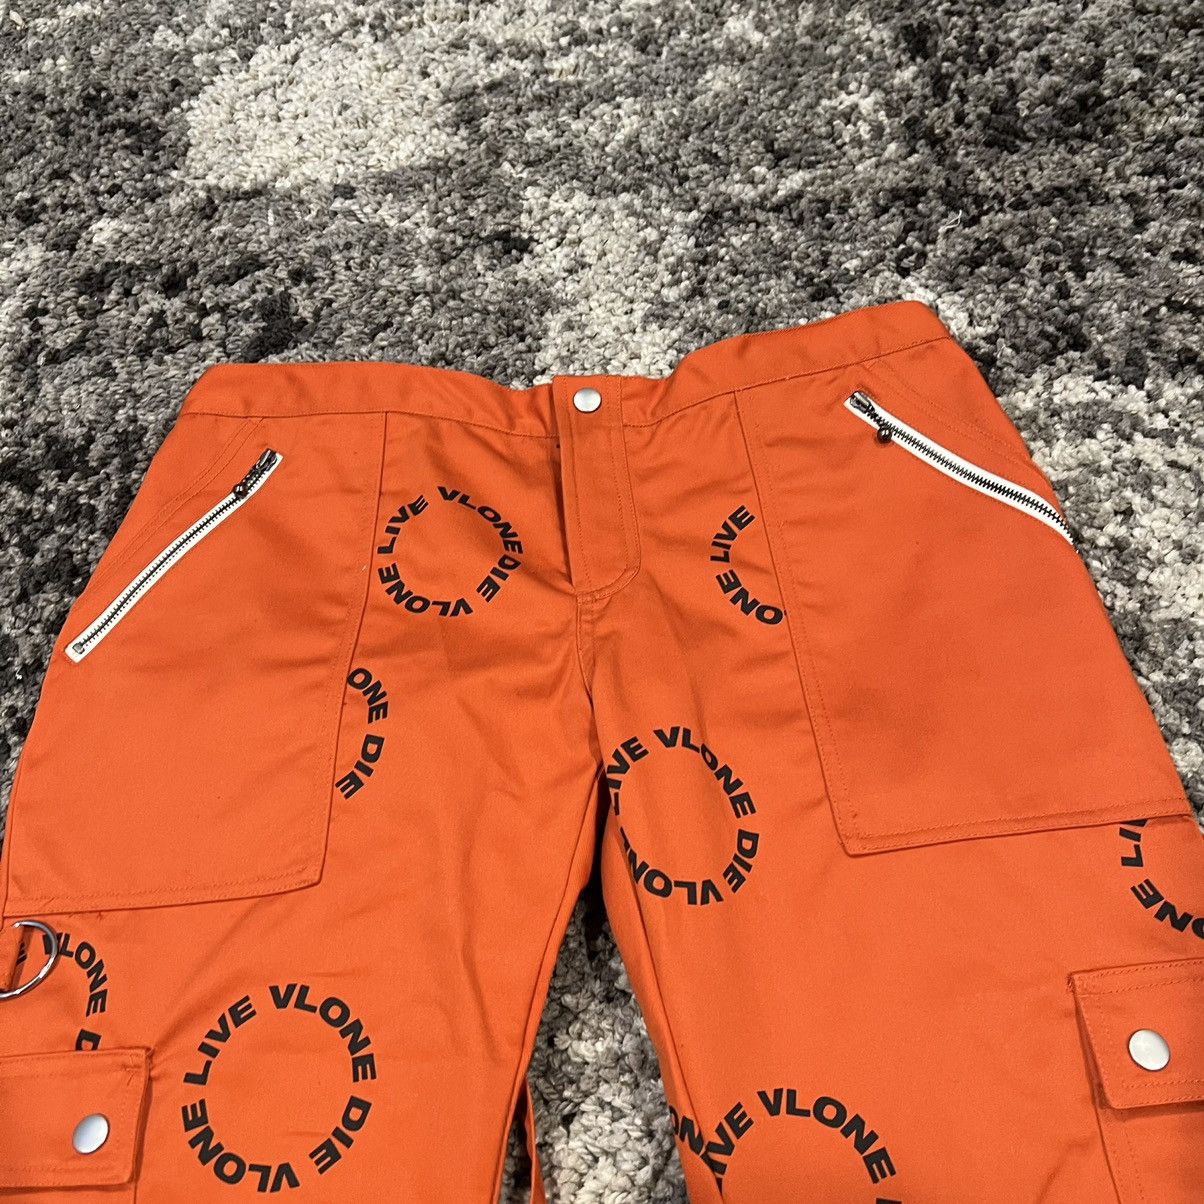 Vlone Vlone Orange With Black Logo Bondage Pants XL Size US 36 / EU 52 - 5 Thumbnail